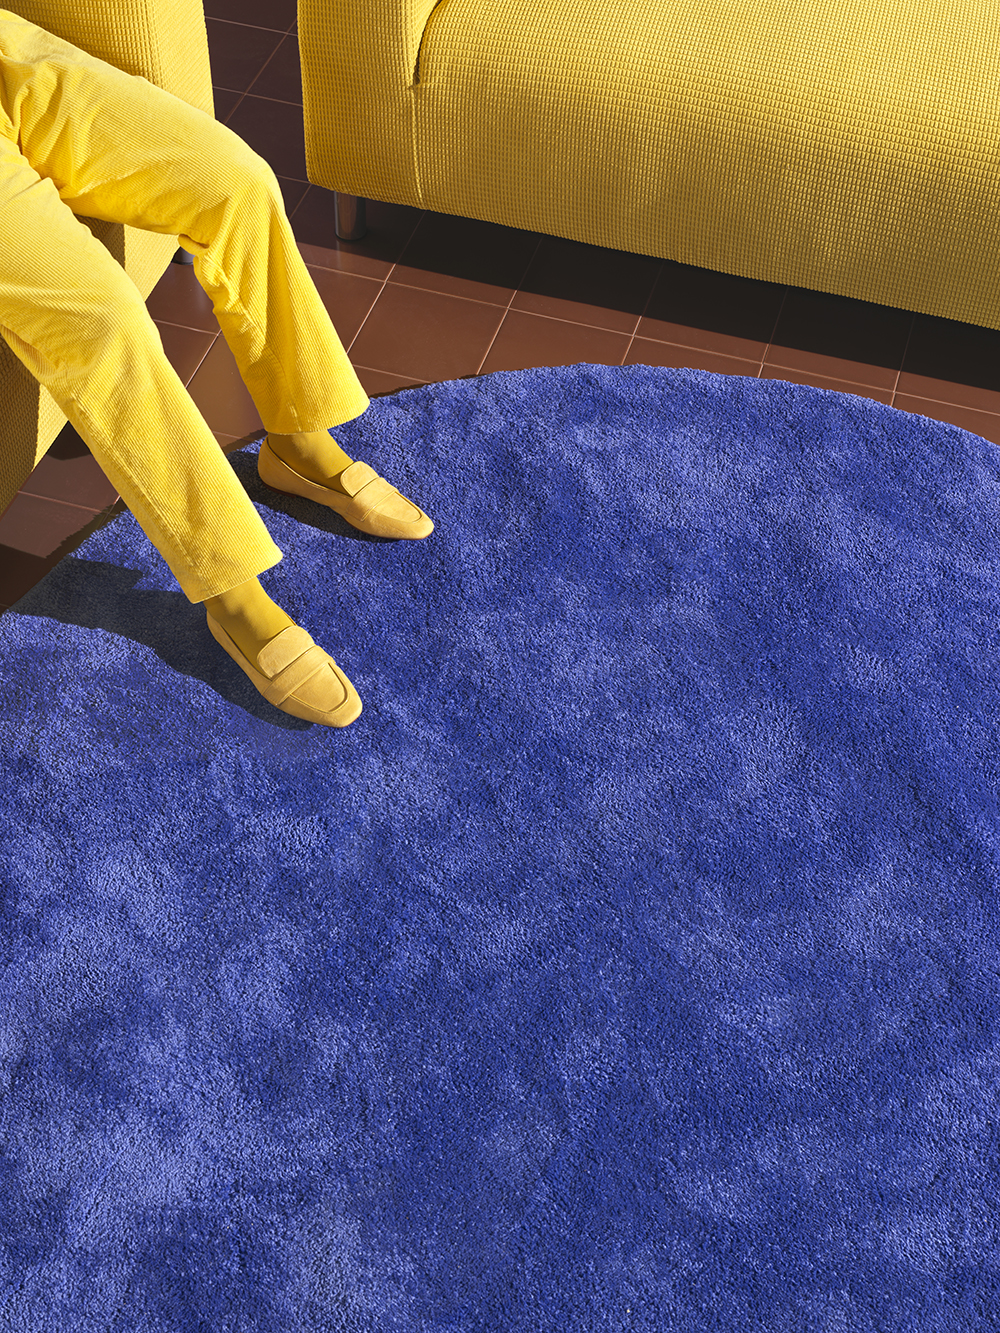 A round blue Stoense rug from the Ikea Nytillverkad collection.